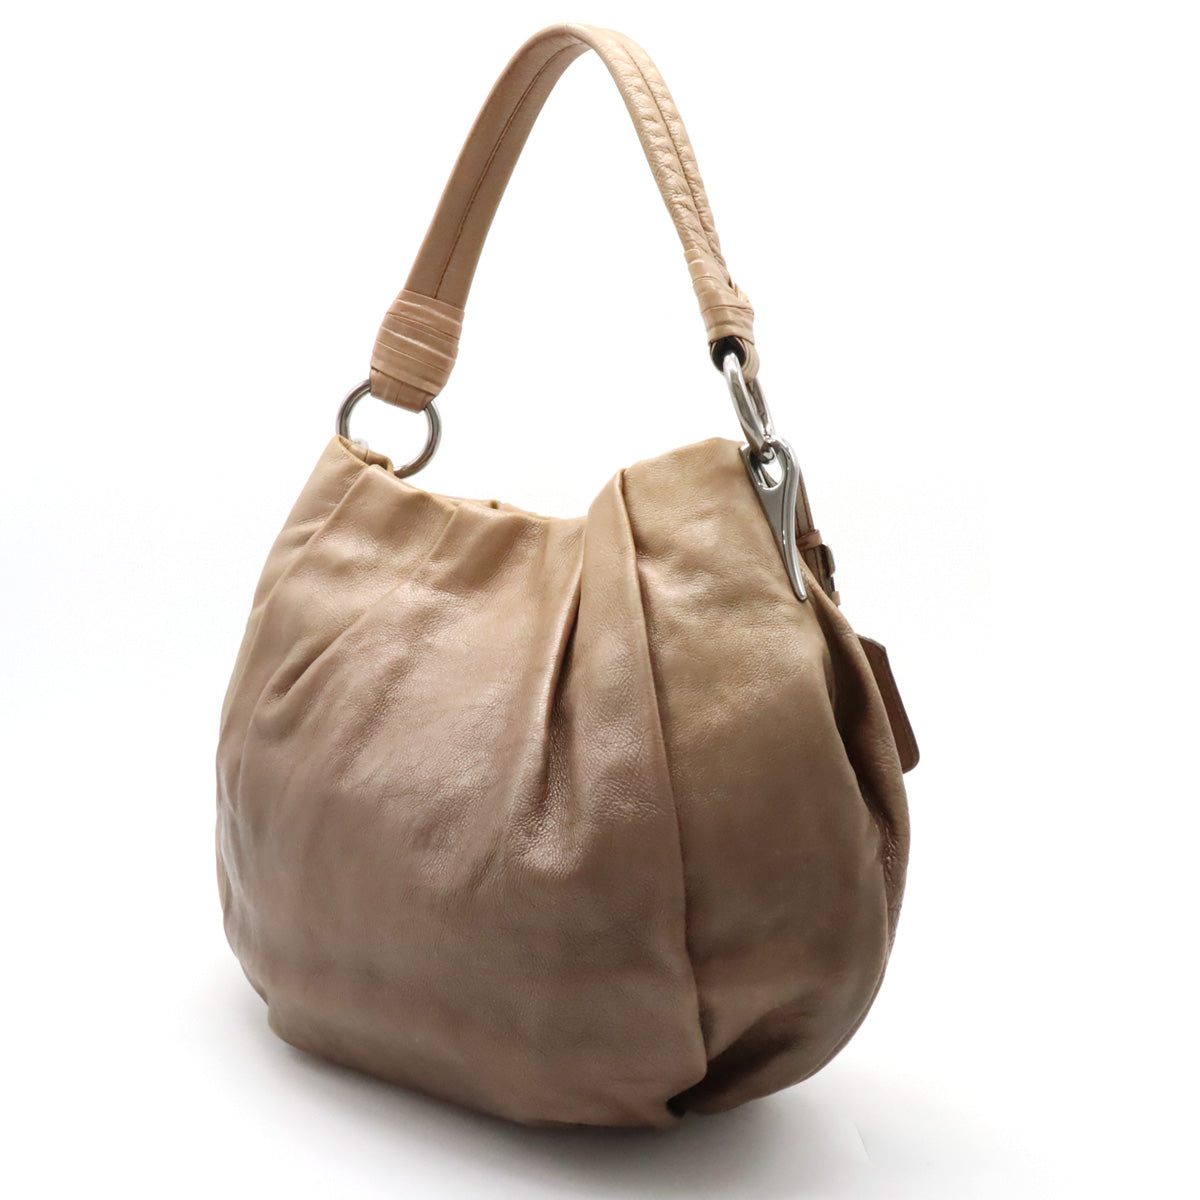 PRADA PRADA GLACE ZIPPERS Shoulder Bag One Shoulder Degradation Leather Pearl Pink Beach Bronze Silver  Blumin